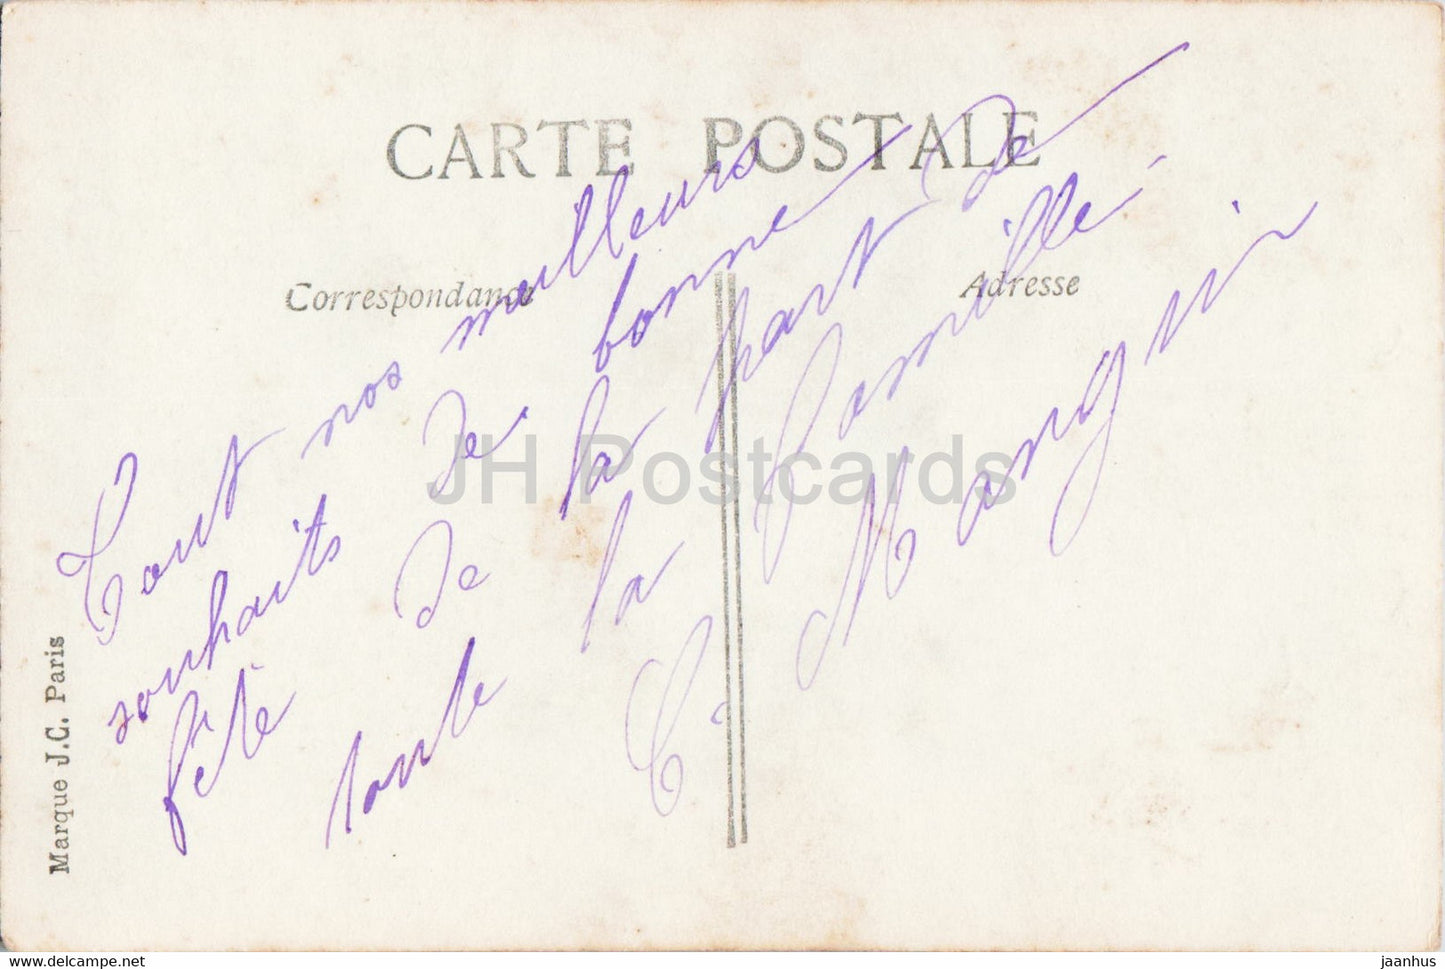 Easter Greeting Card - Joyeuse Fete - man - 2180 - JC Paris - old postcard - France - used